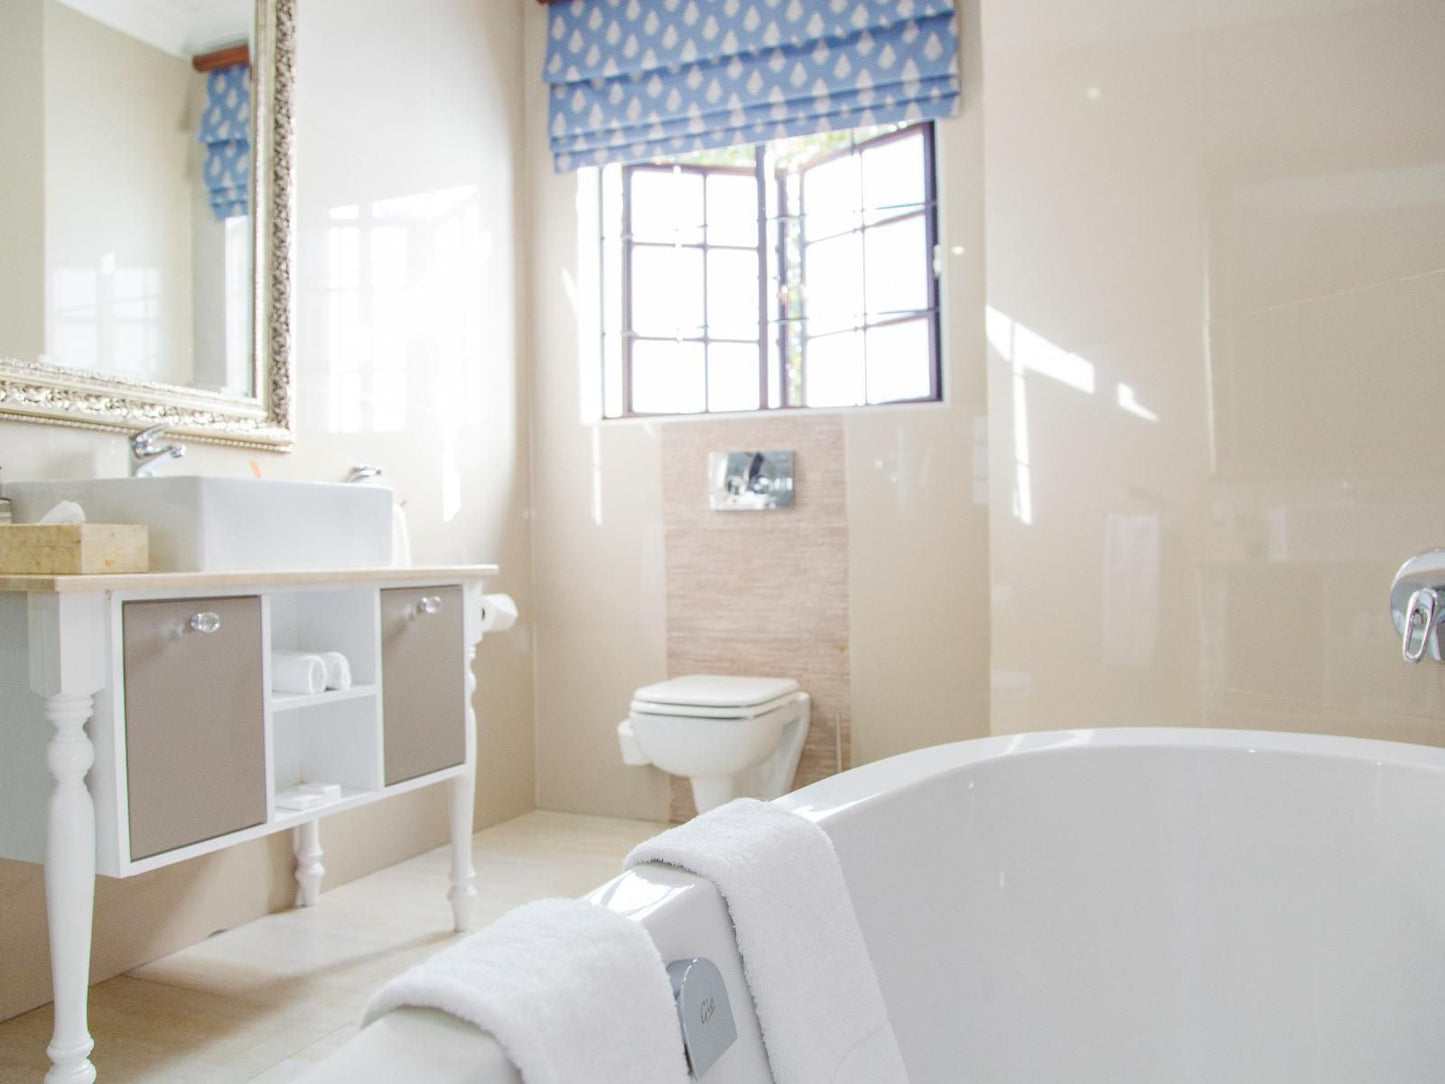 Ivory Manor Boutique Hotel Rietvalleipark Pretoria Tshwane Gauteng South Africa Unsaturated, Bathroom